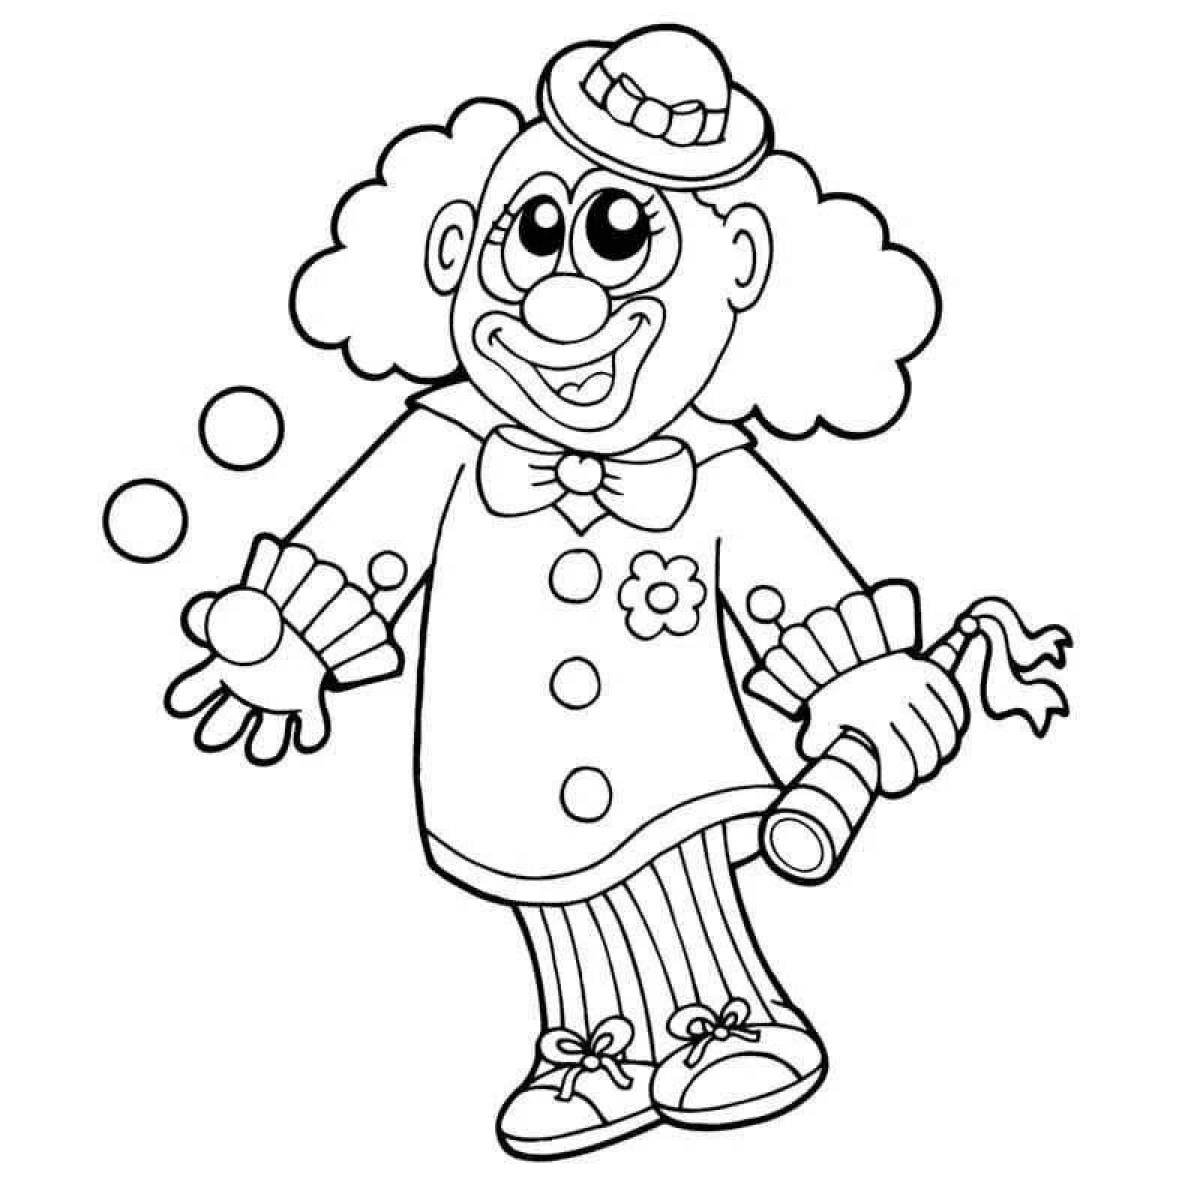 Раскраска клоун для детей 3 4 лет. Клоун раскраска. Клоун раскраска для малышей. Клоун раскраска для детей. Раскраски клоуны для детей 5-6 лет.